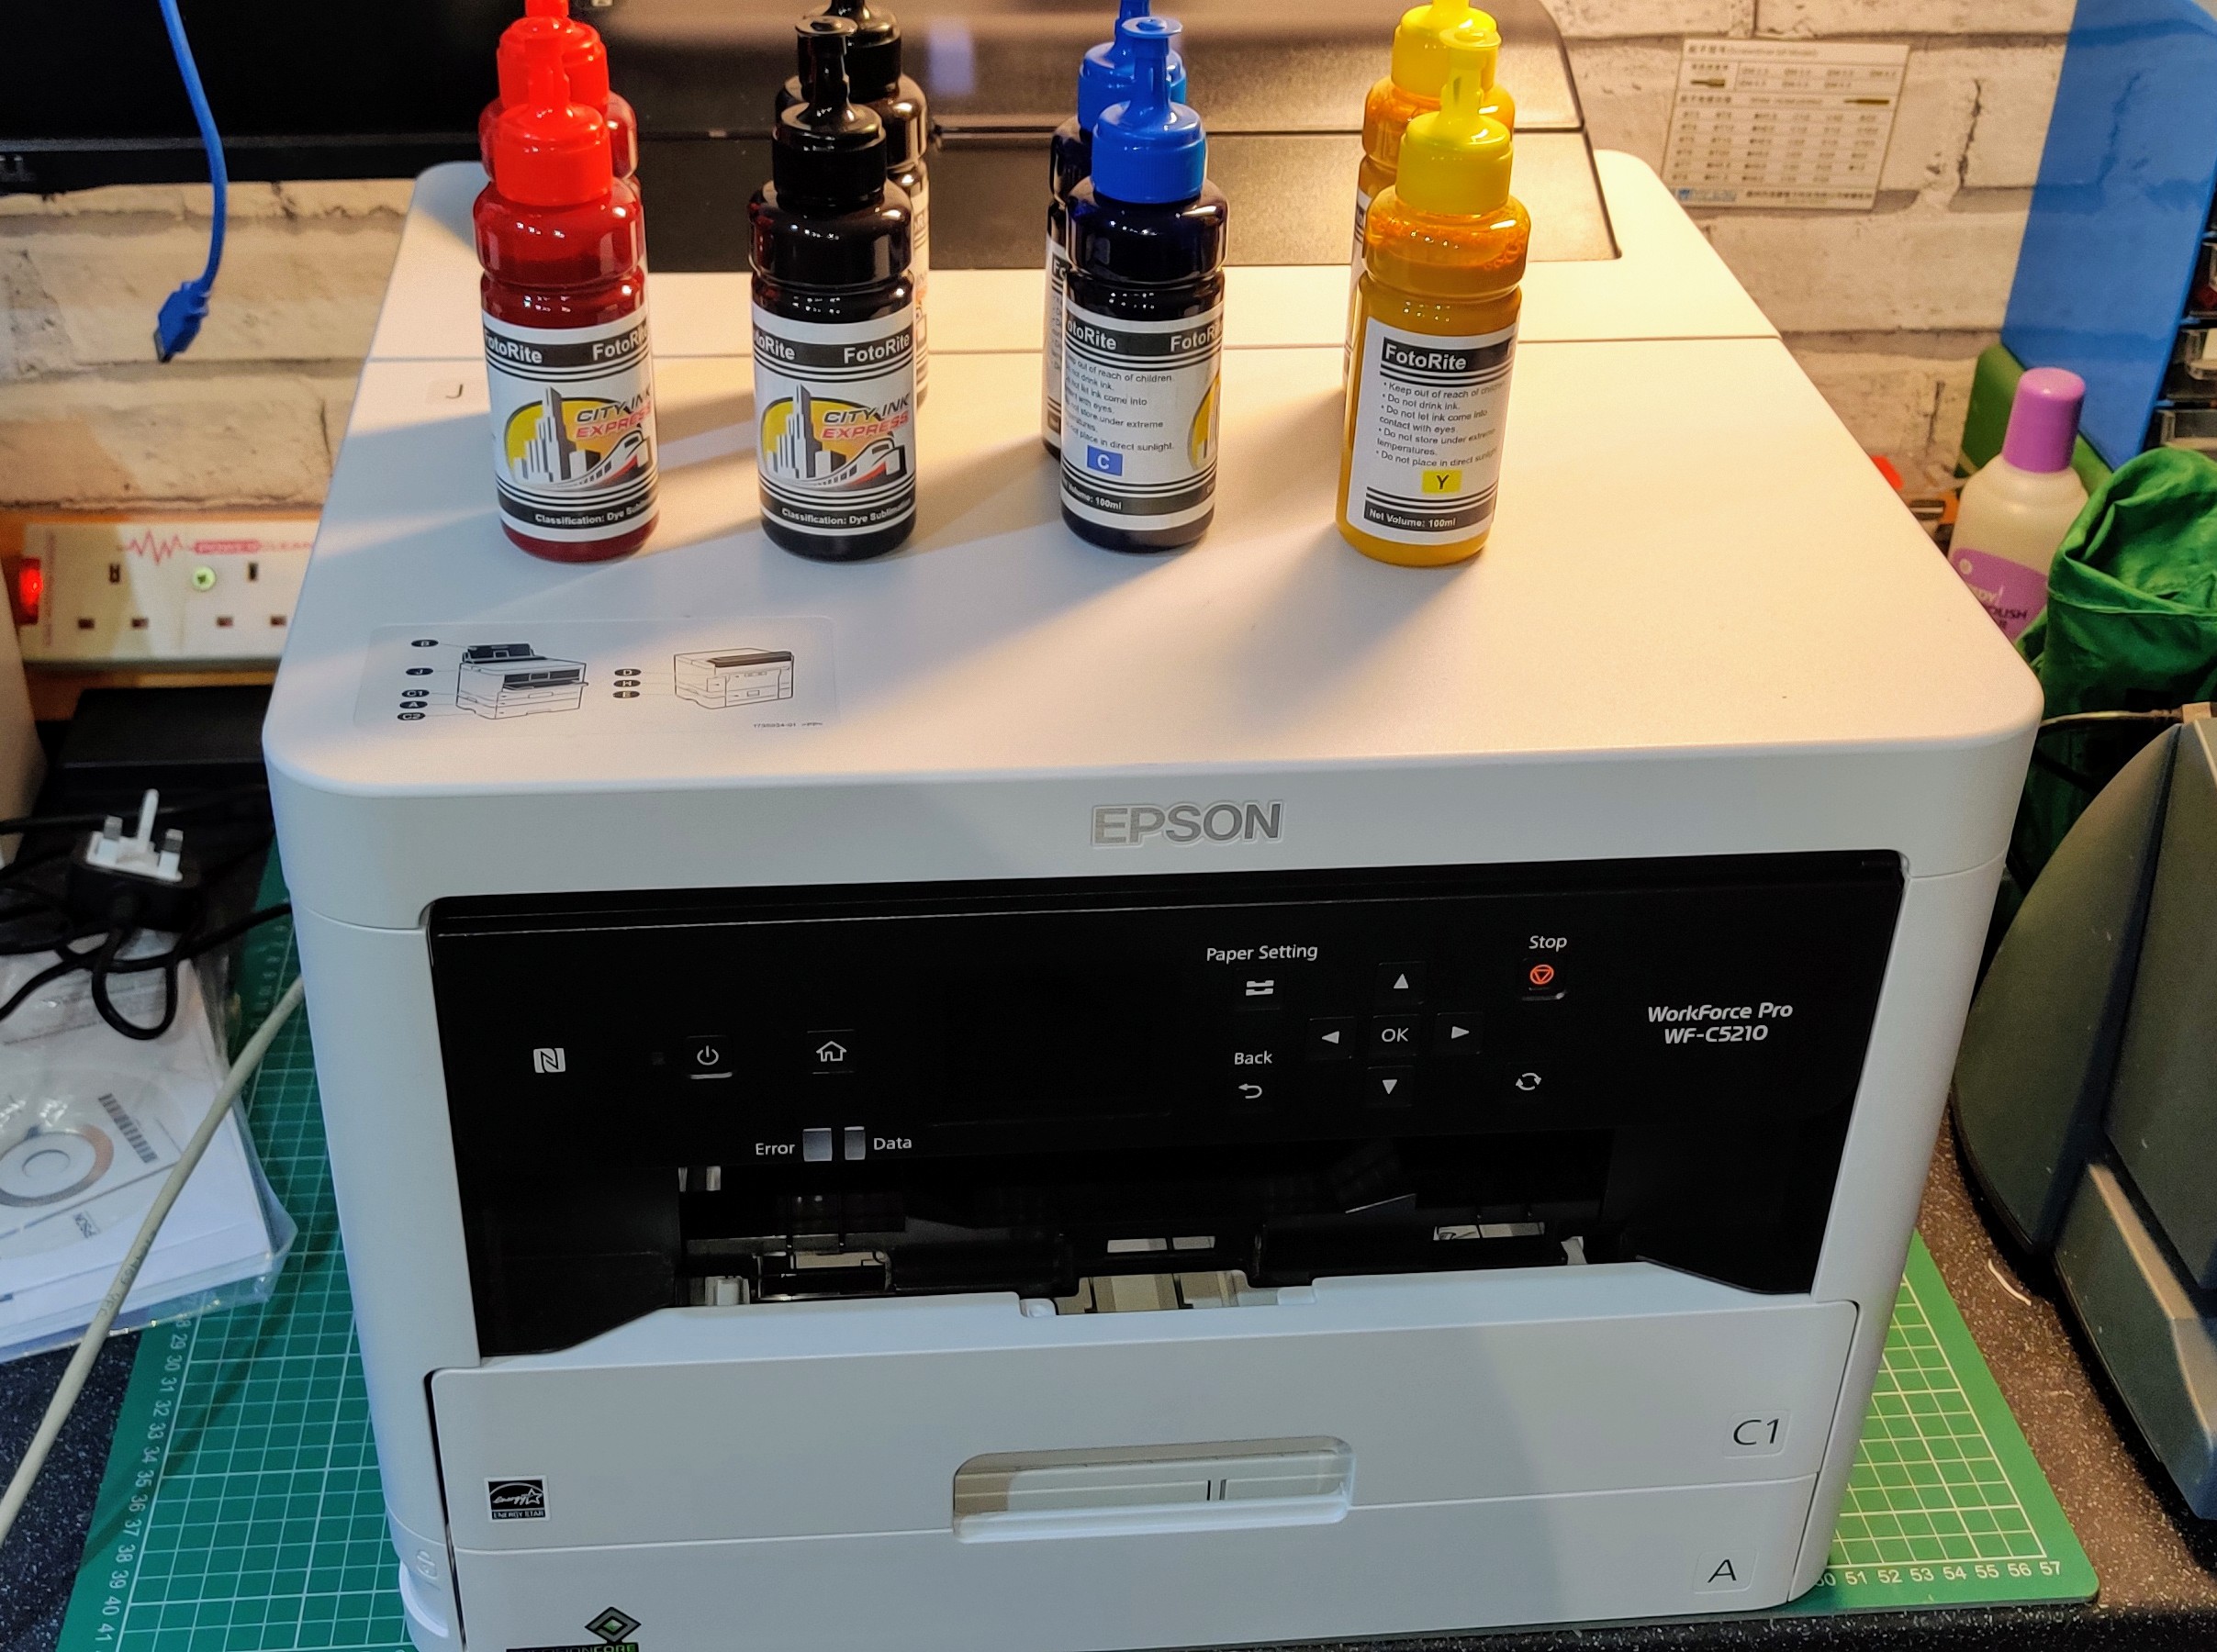 Epson WF C5210 printer and mug press UNBOXED